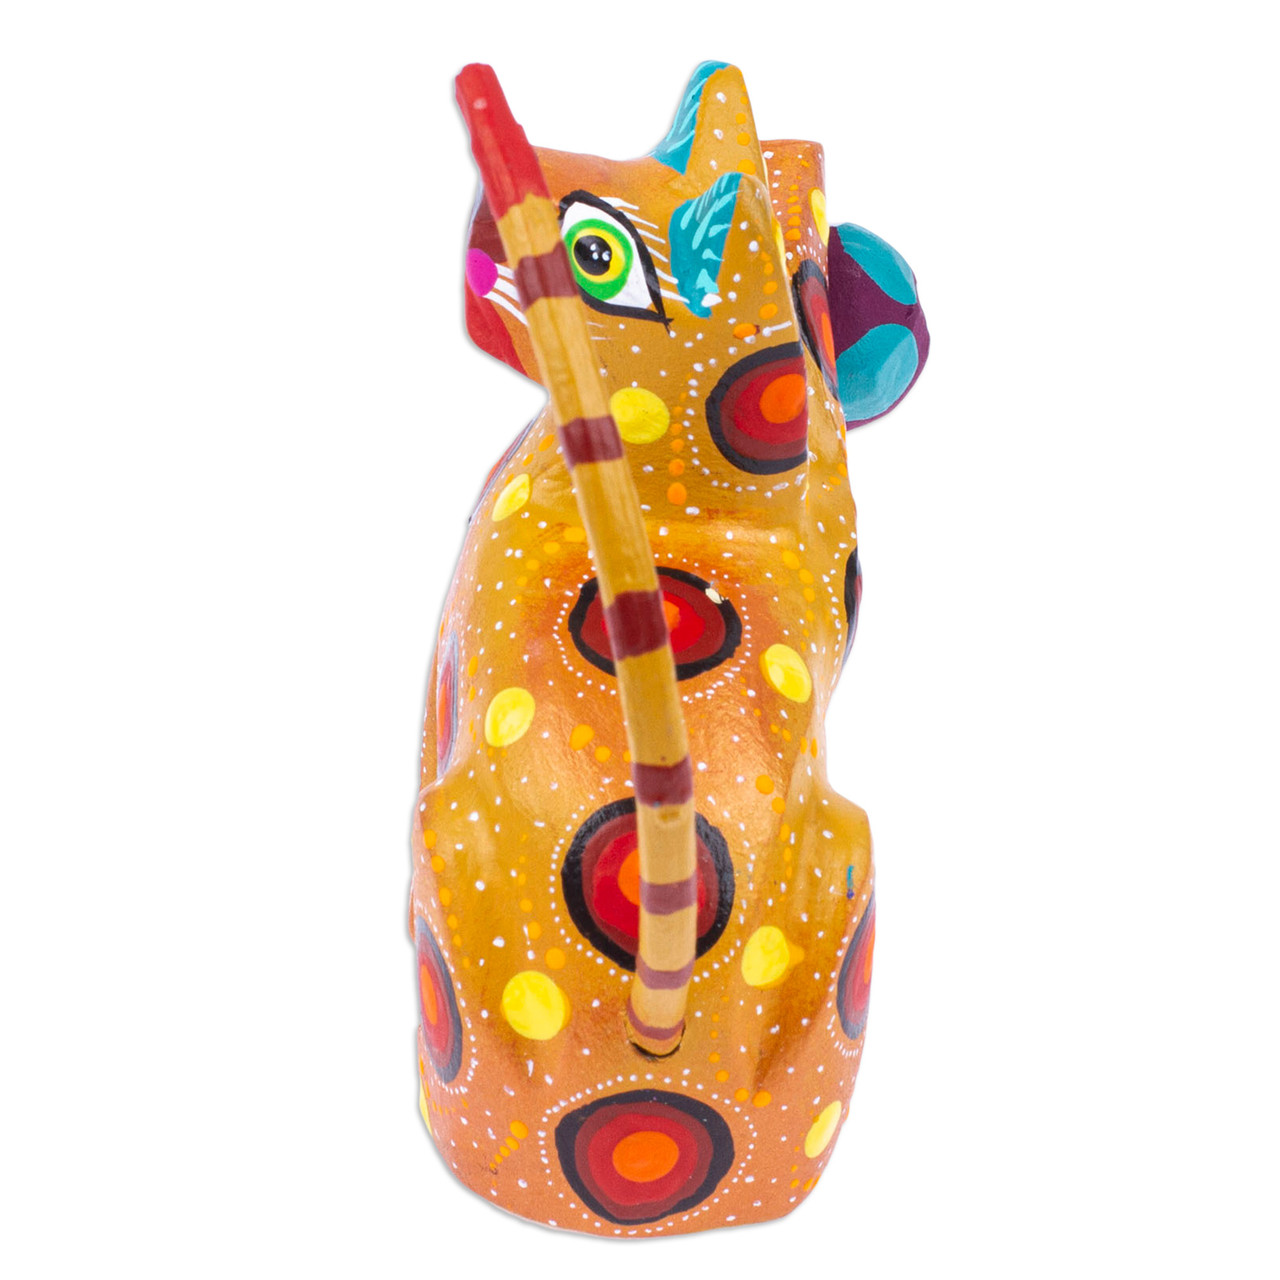 Handcrafted Copal Wood Alebrije Cat Figurine from Mexico, 'Graceful Feline